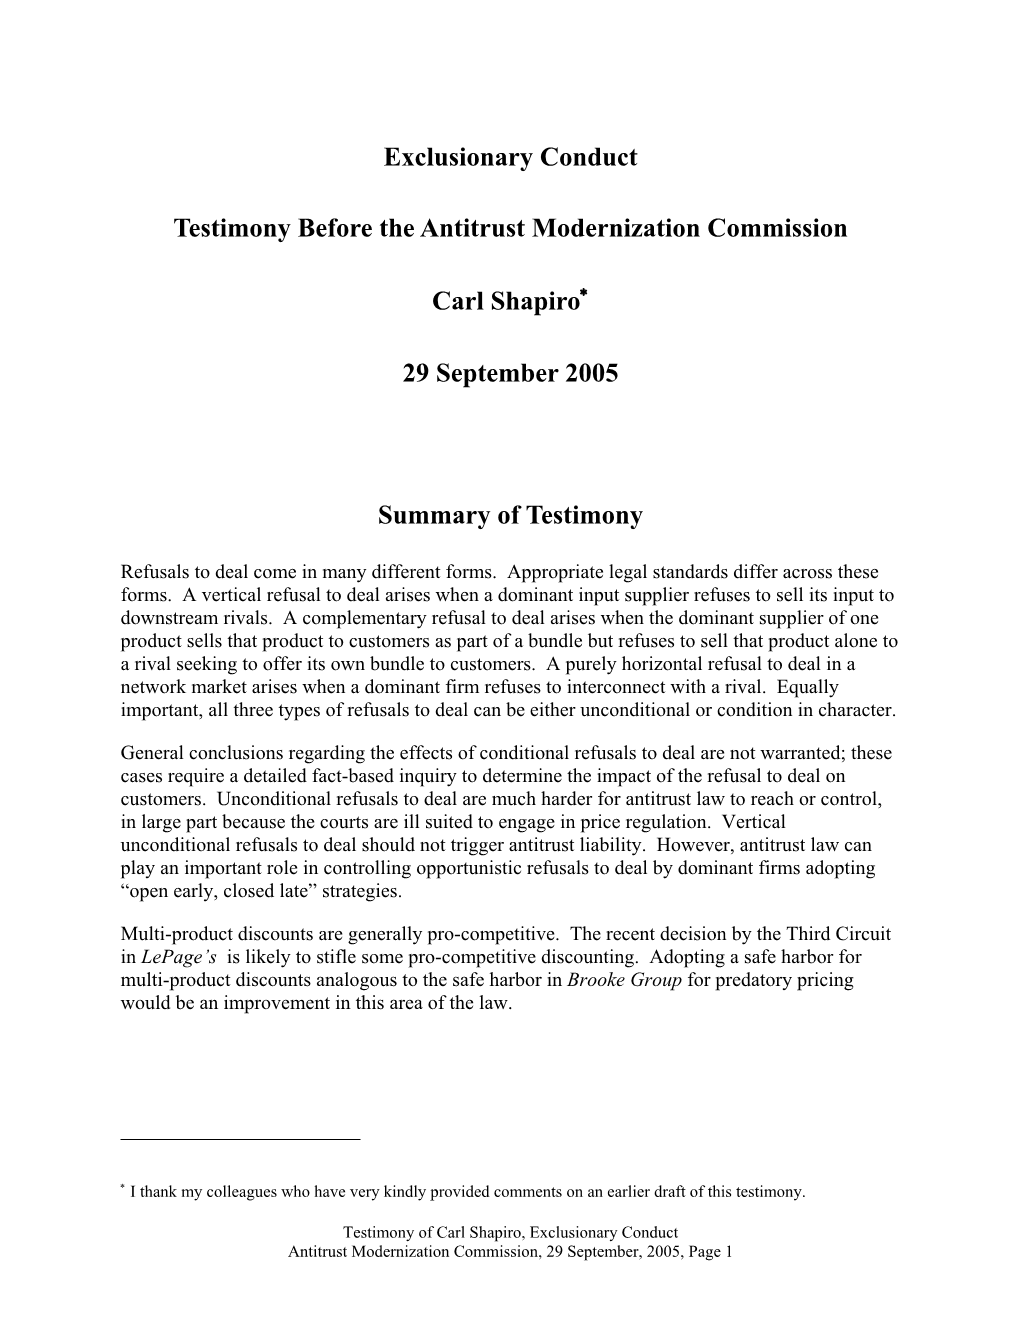 Exclusionary Conduct Testimony Before the Antitrust Modernization Commission Carl Shapiro 29 September 2005 Summary of Testimony